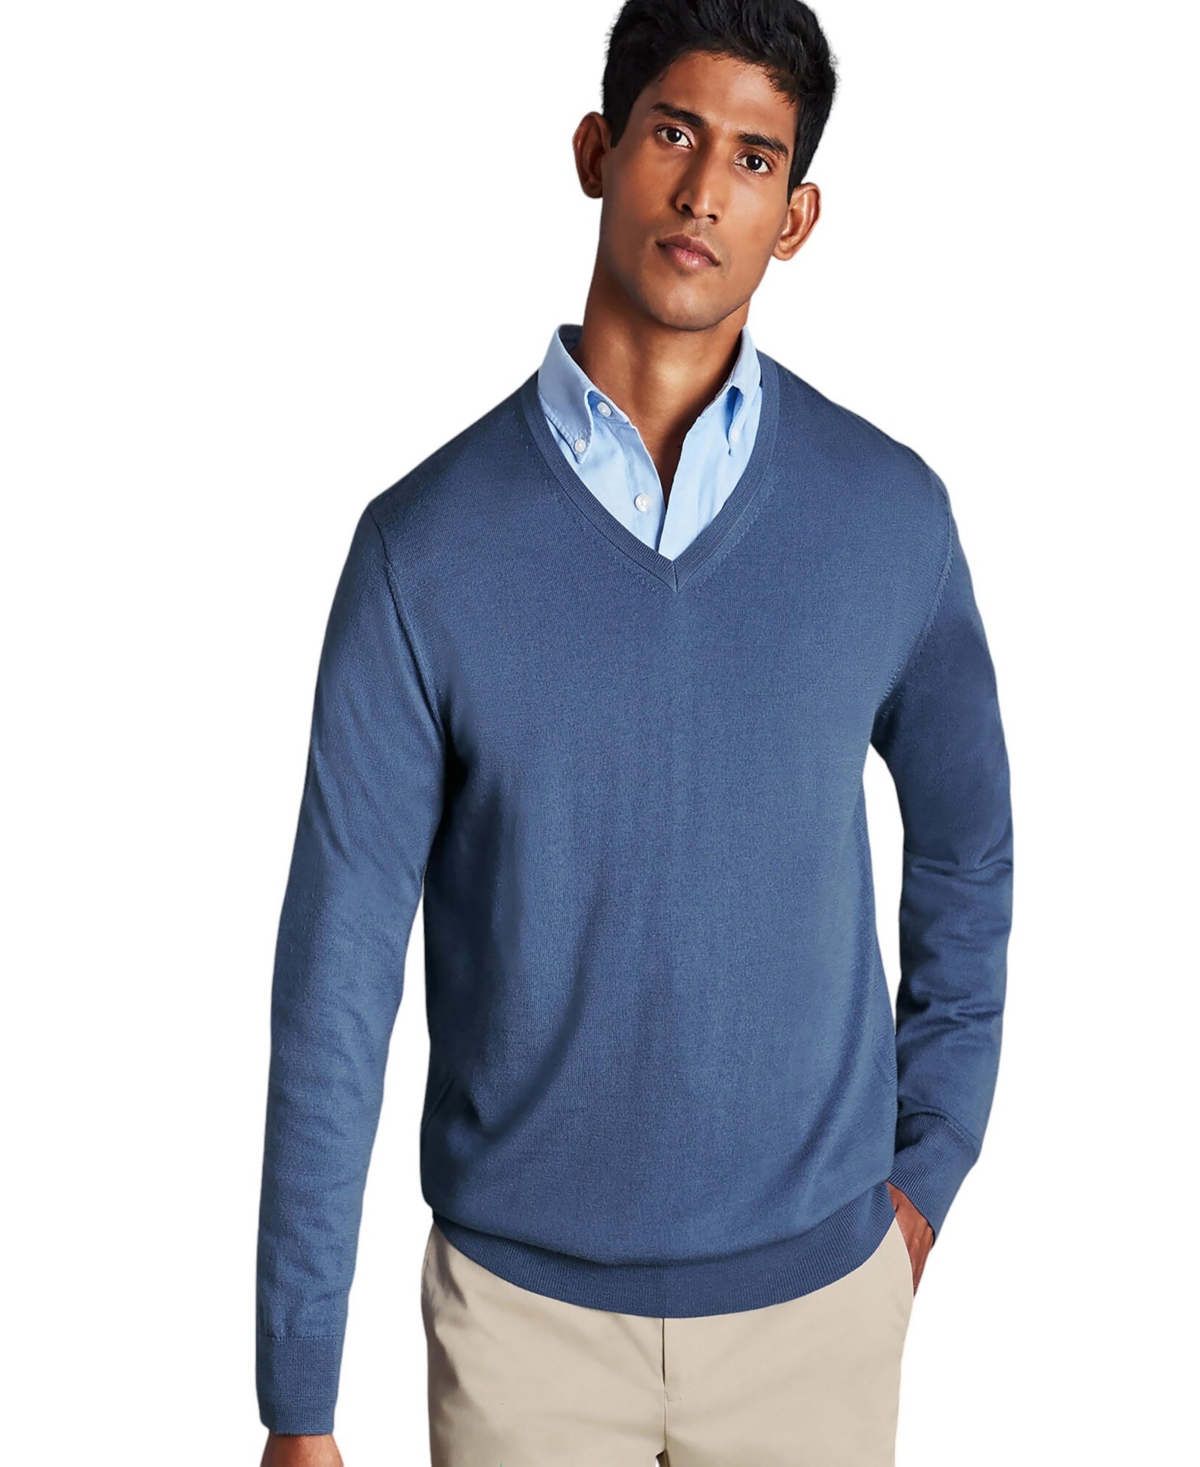 Men's Pure Merino V Neck Sweater - Steel blue